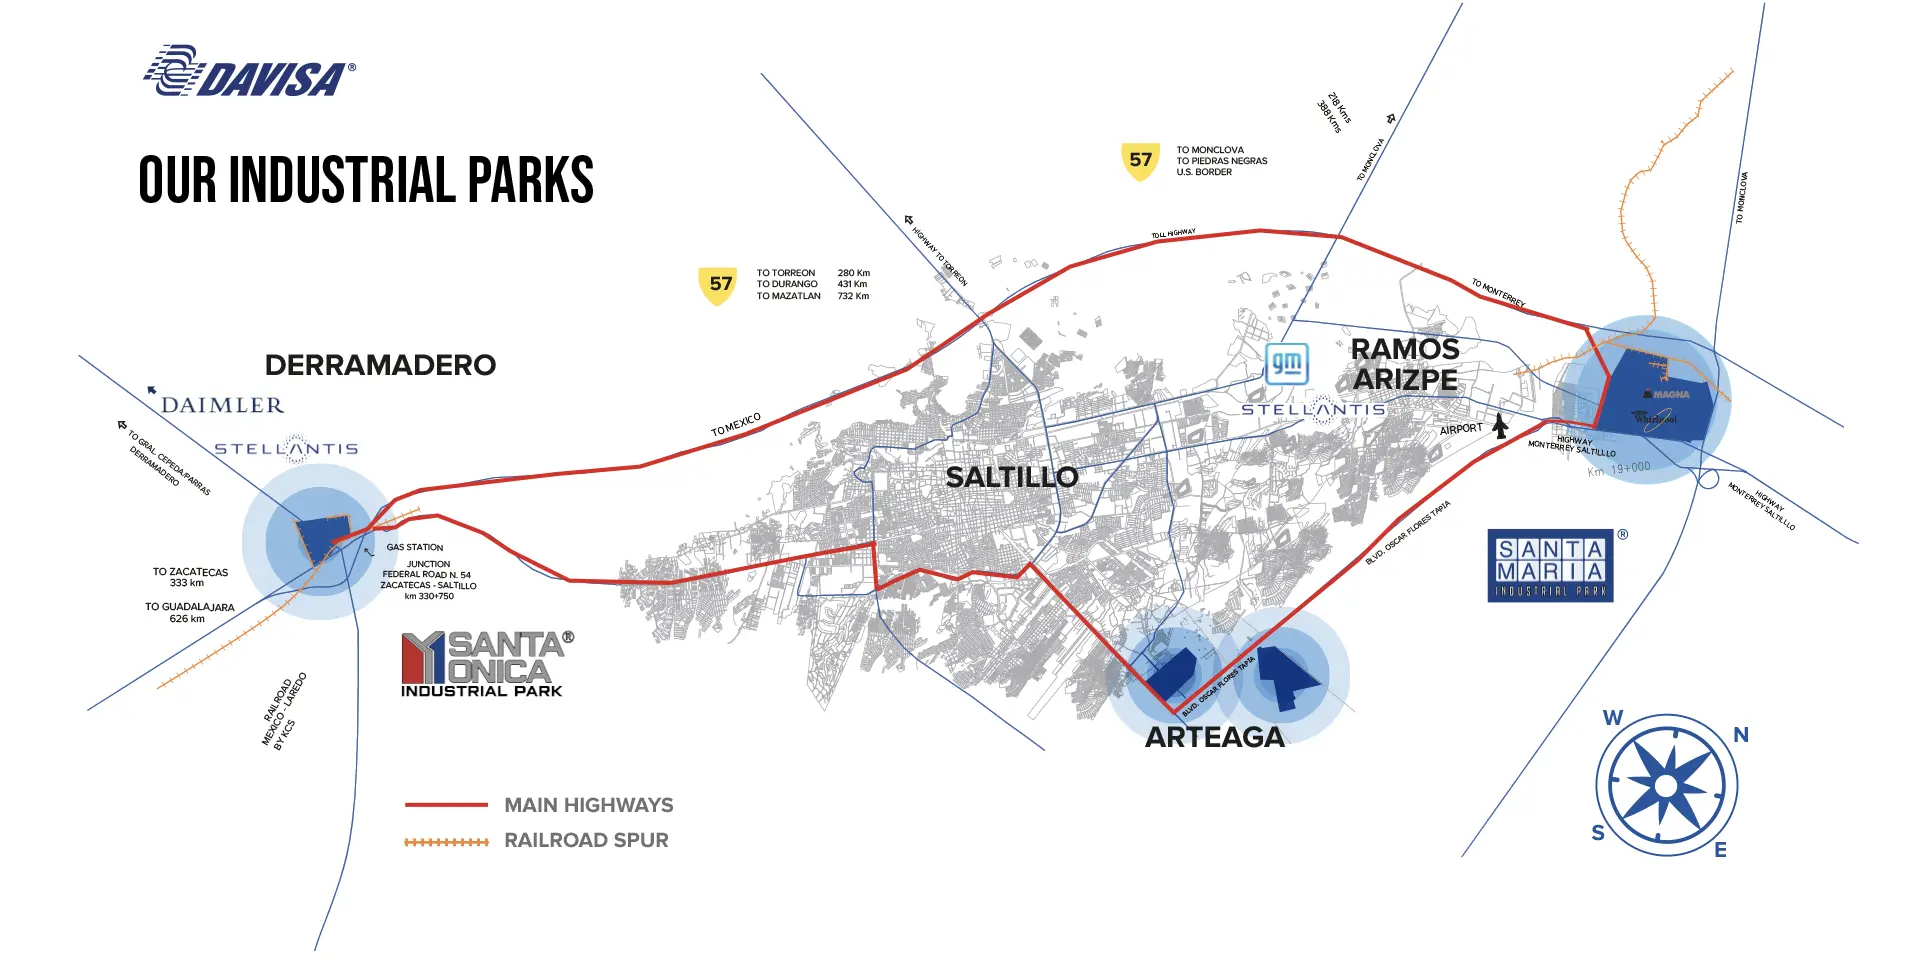 Map of industrial parks located in Coahuila: Saltillo, Derramadero, Arteaga and Ramos Arizpe.